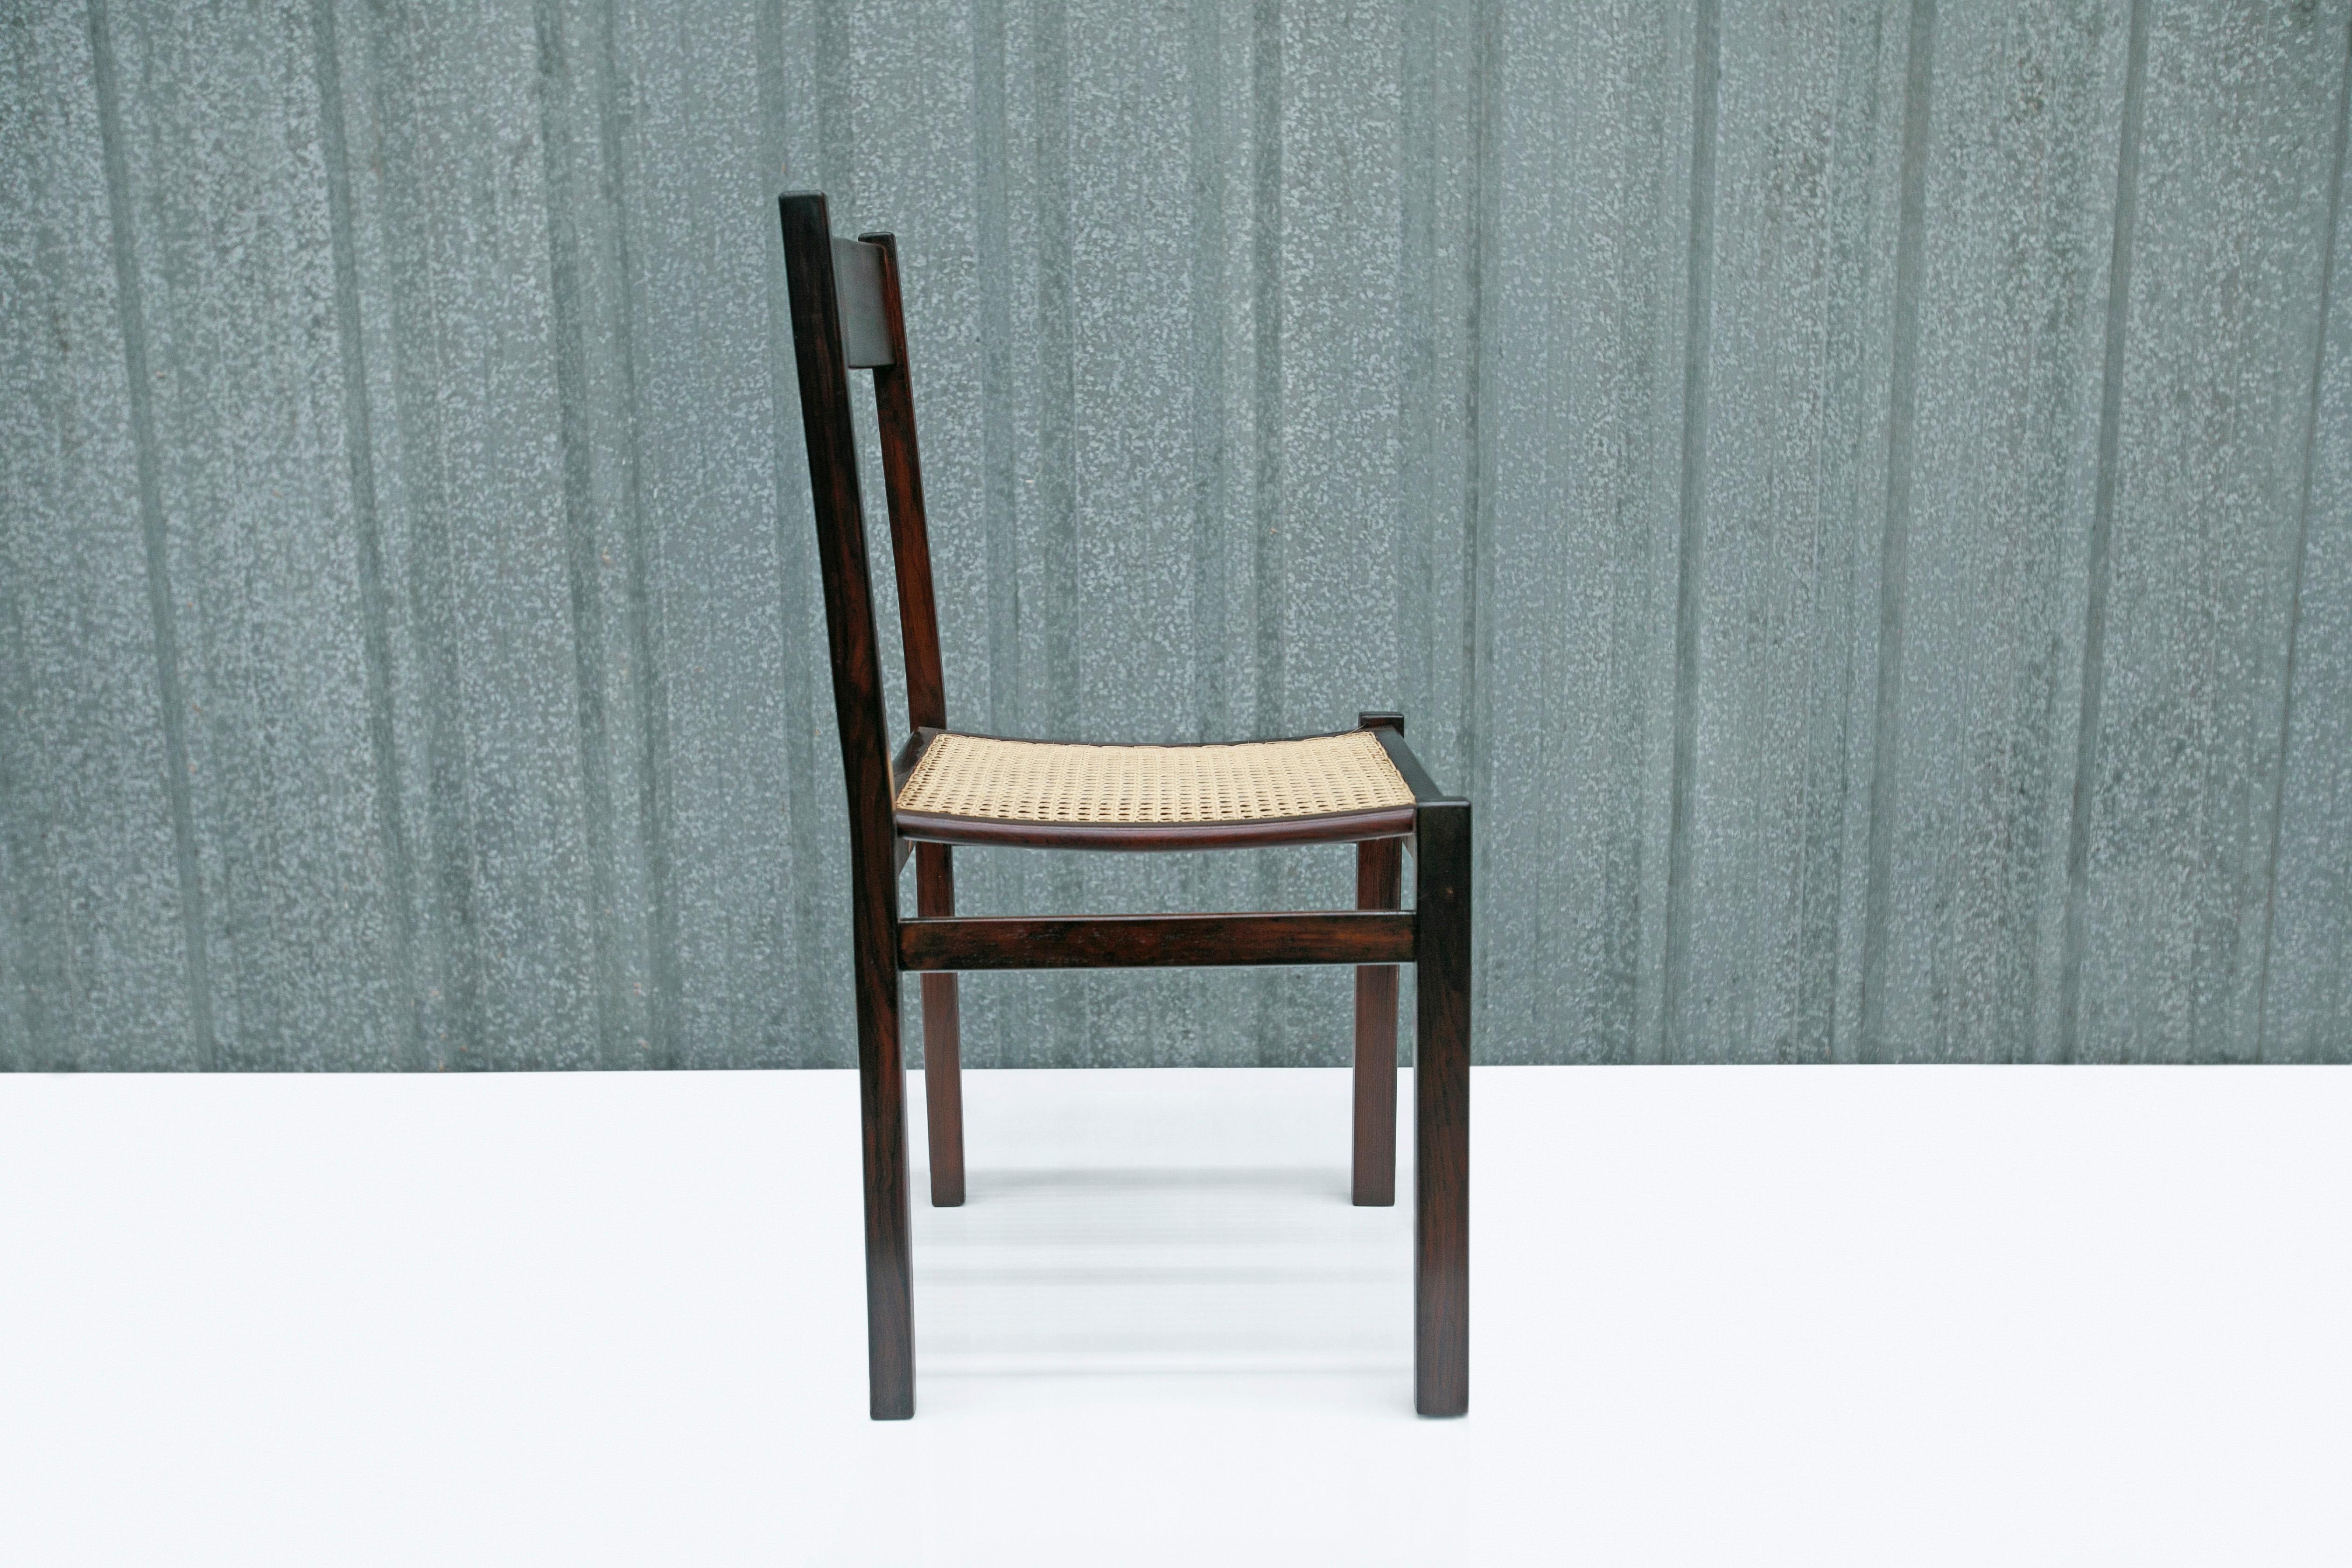 Caning Set of 8 Brazilian Modern Chairs in Hardwood & Cane by Joaquim Tenreiro, 1960s